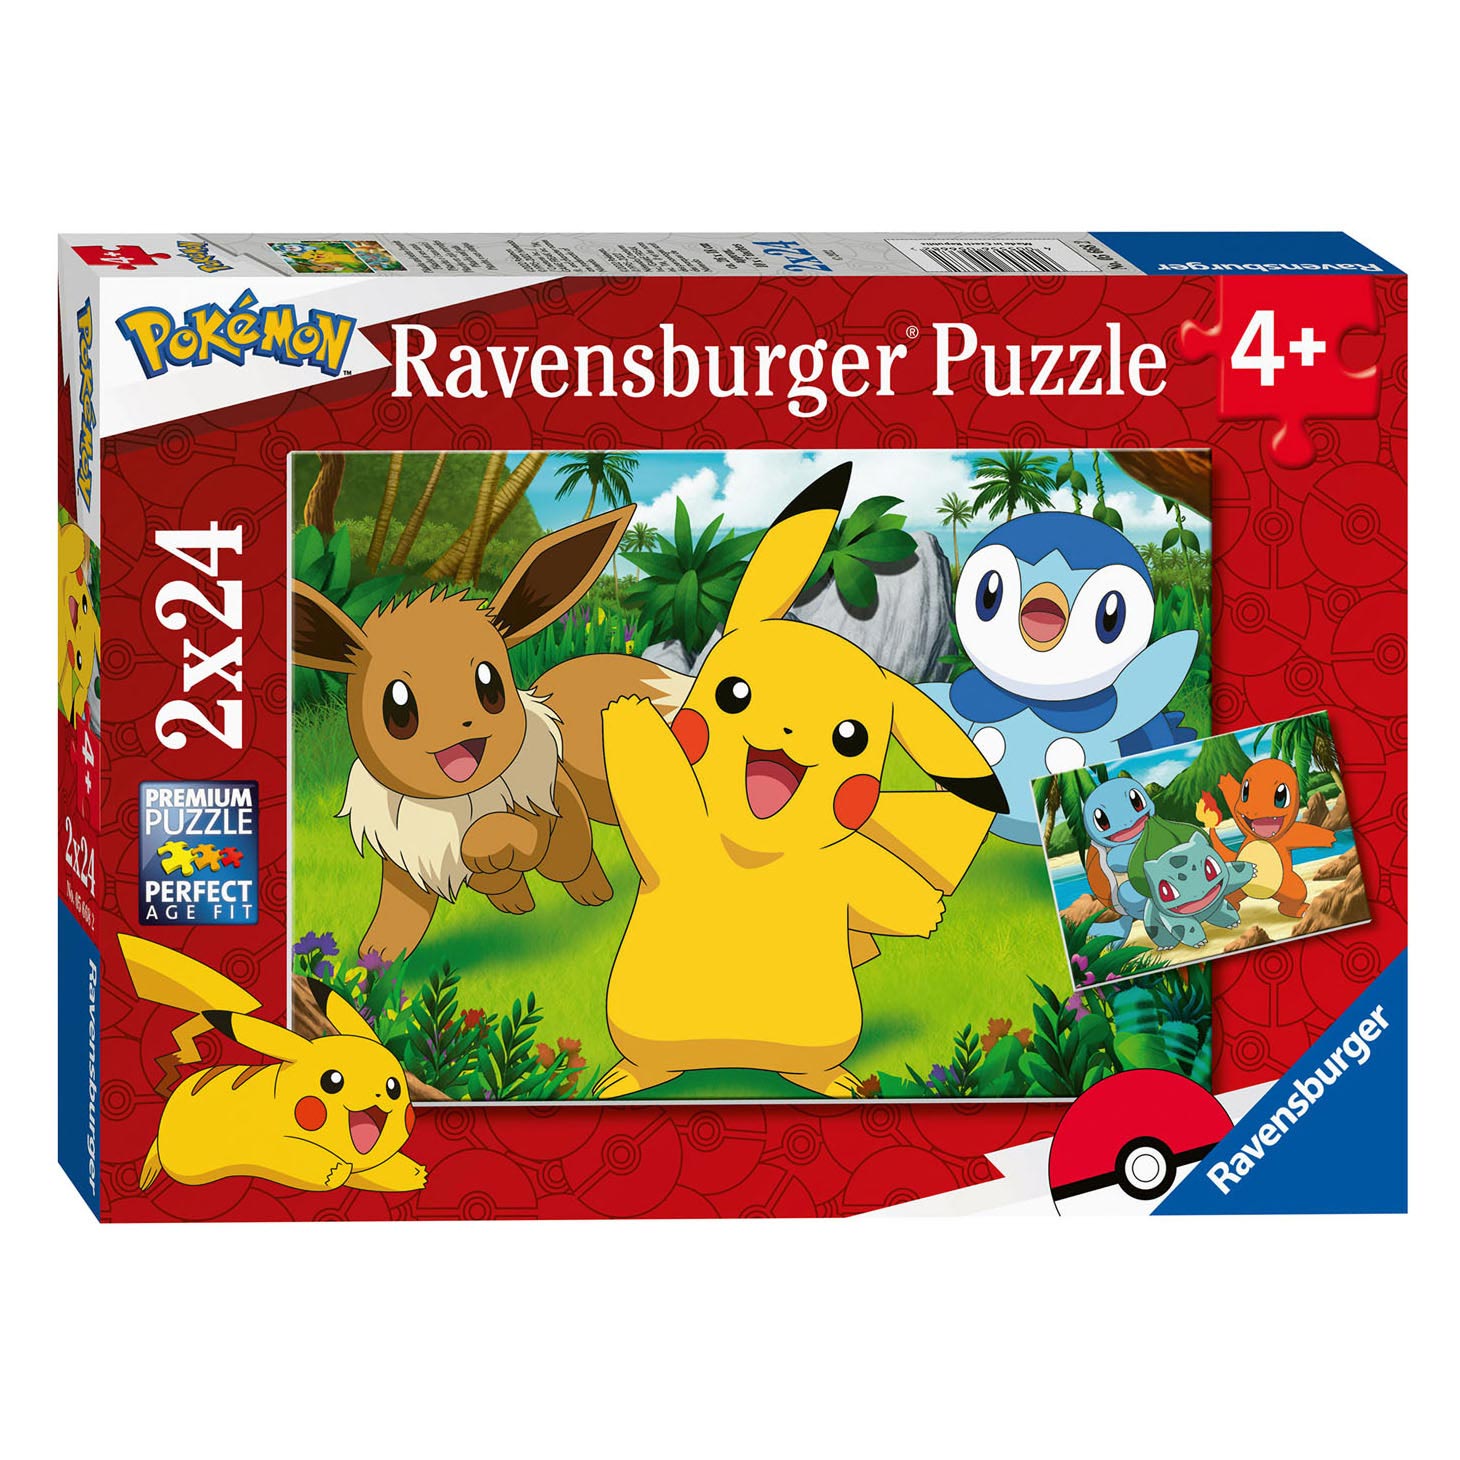 Ravensburger Puzzel - Pikachu en zijn Vrienden, 2x24st.